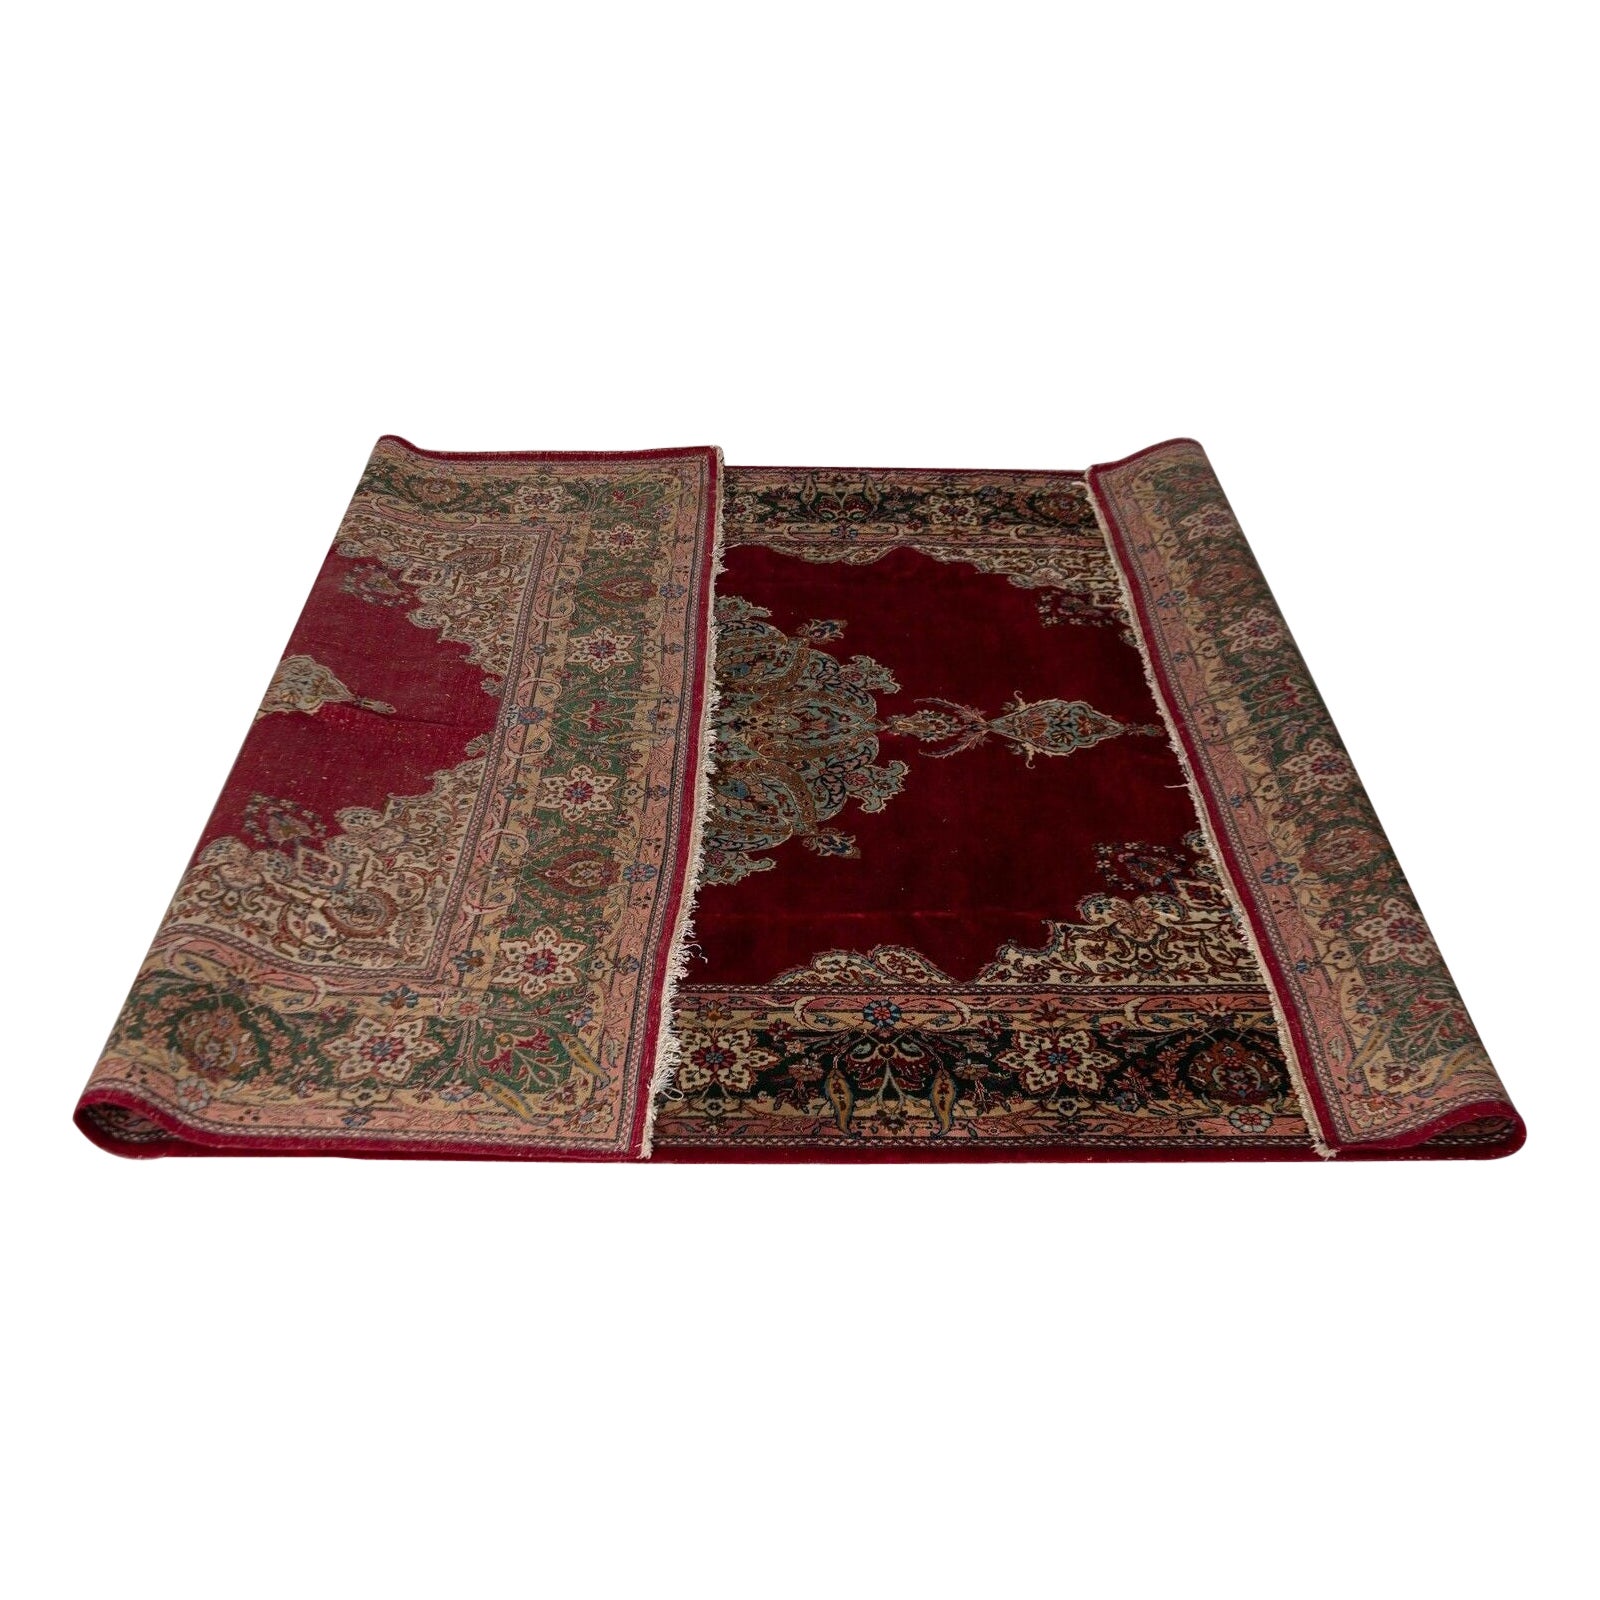 Large Persian Wool Carpet Rug For Sale